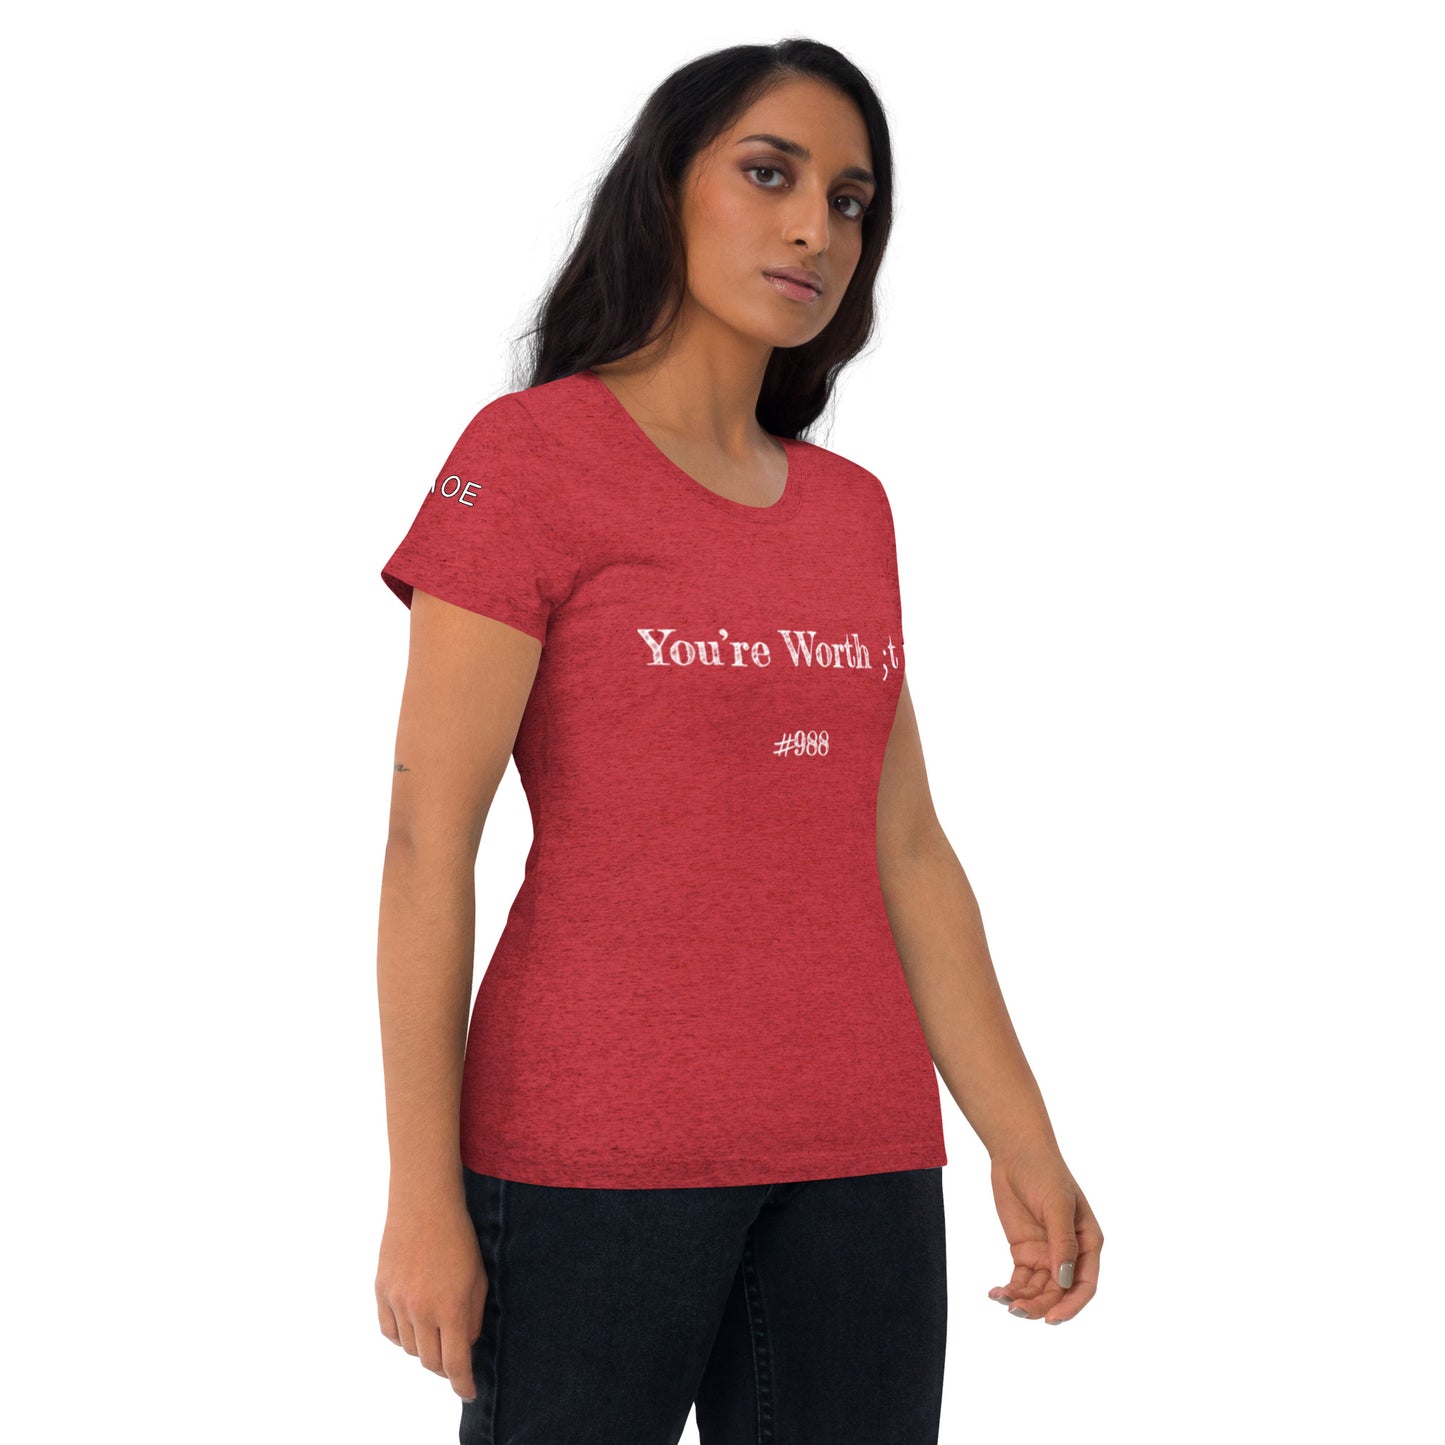 MHA: You're Worth ;t - Short sleeve t-shirt